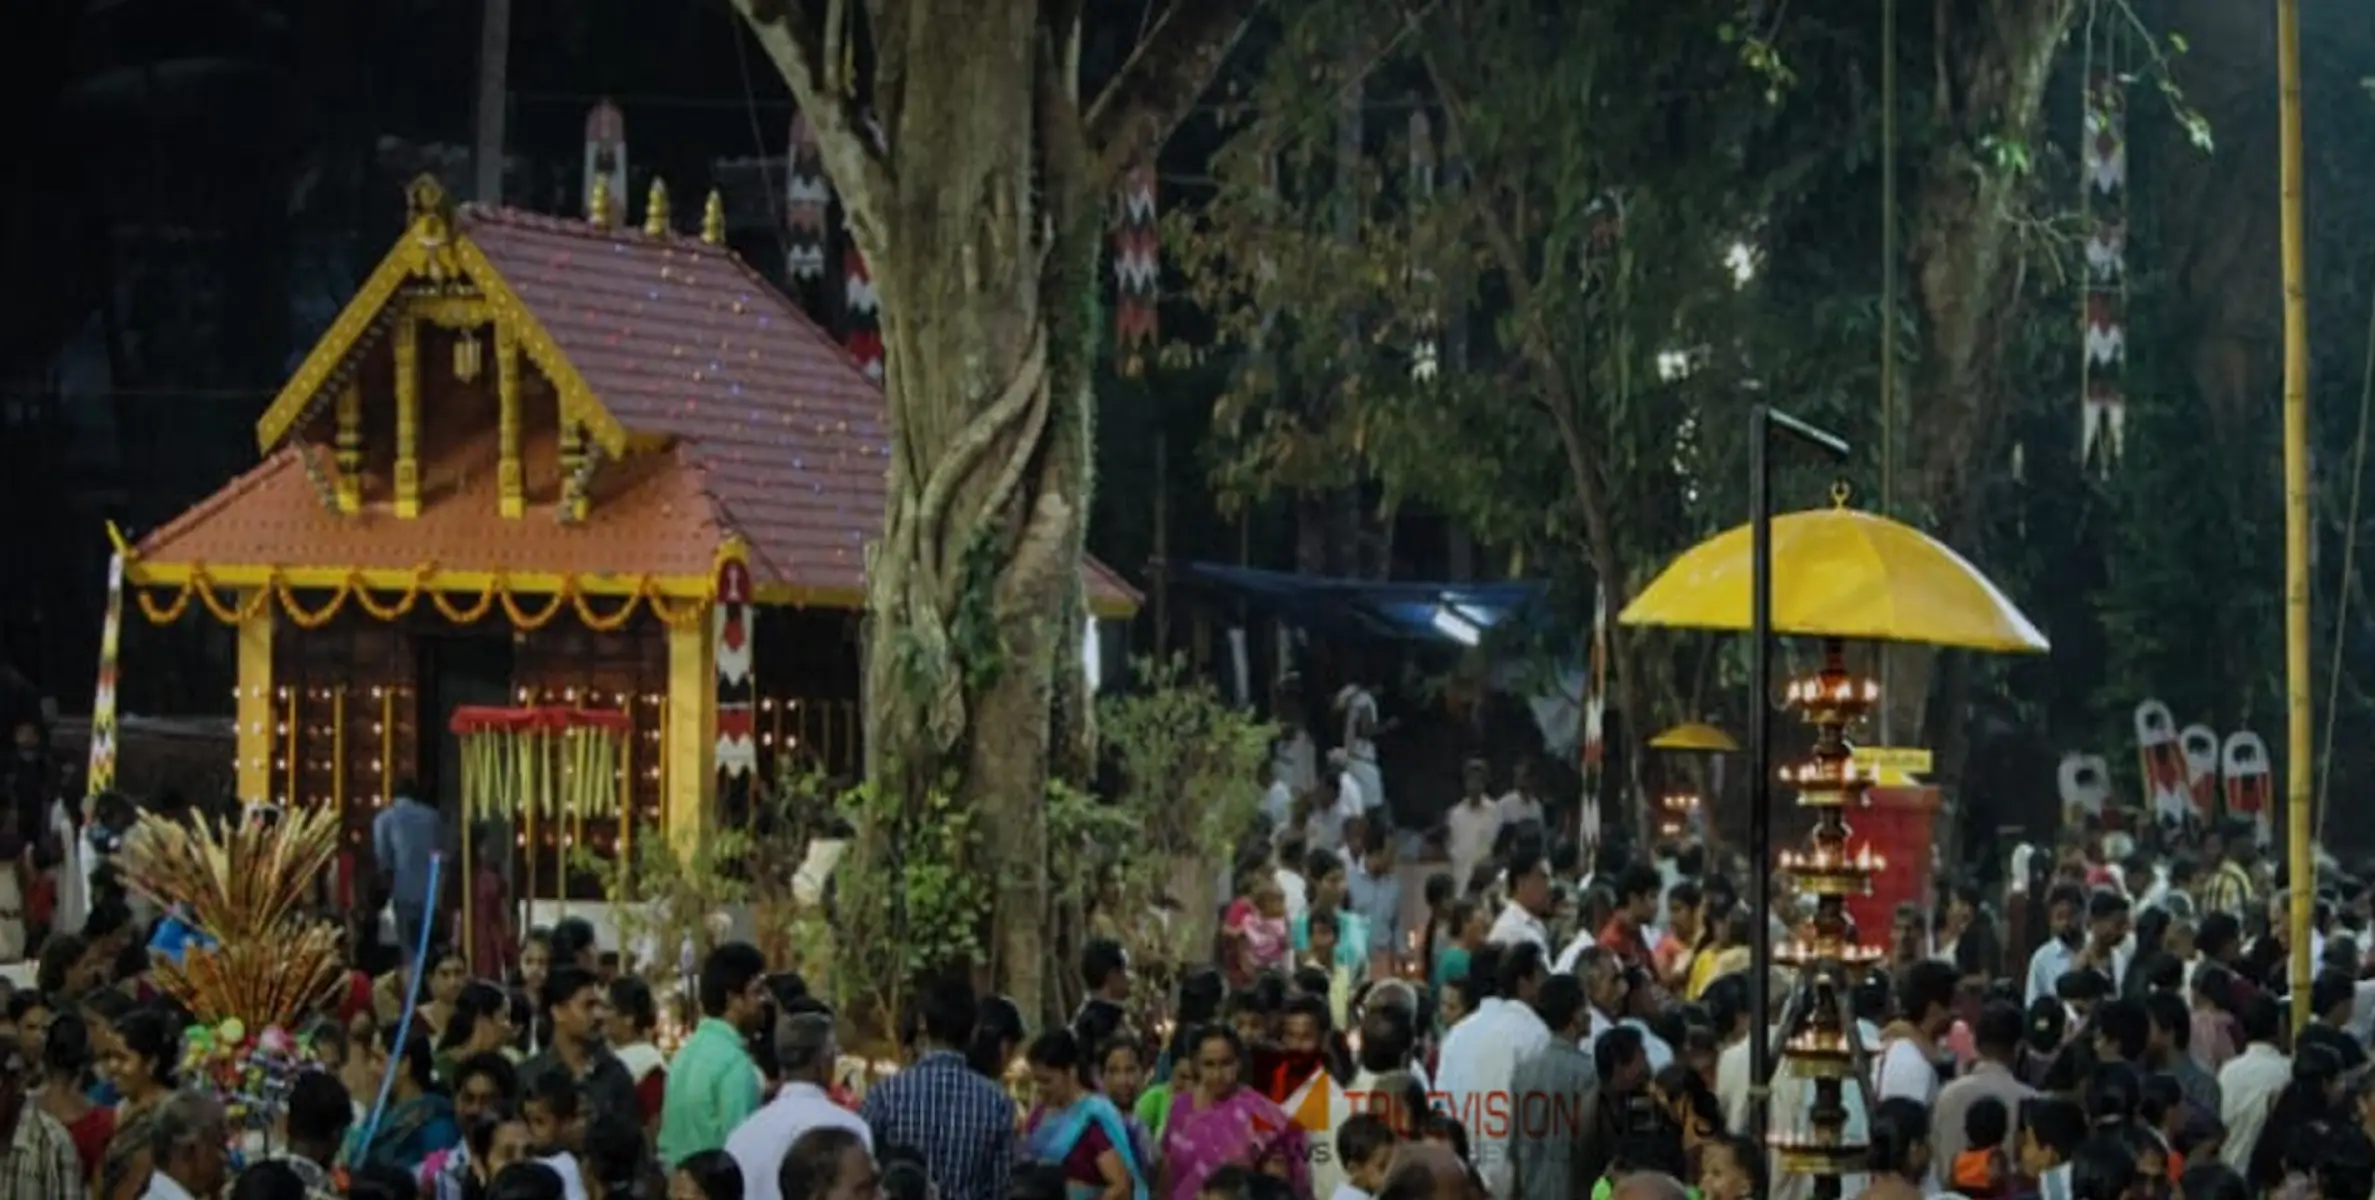 #festivel | എടച്ചേരി ശ്രീ കാക്കന്നൂർ ക്ഷേത്രം തിറമഹോത്സവത്തിന് ജനുവരി 29 ന് തുടക്കമാകും